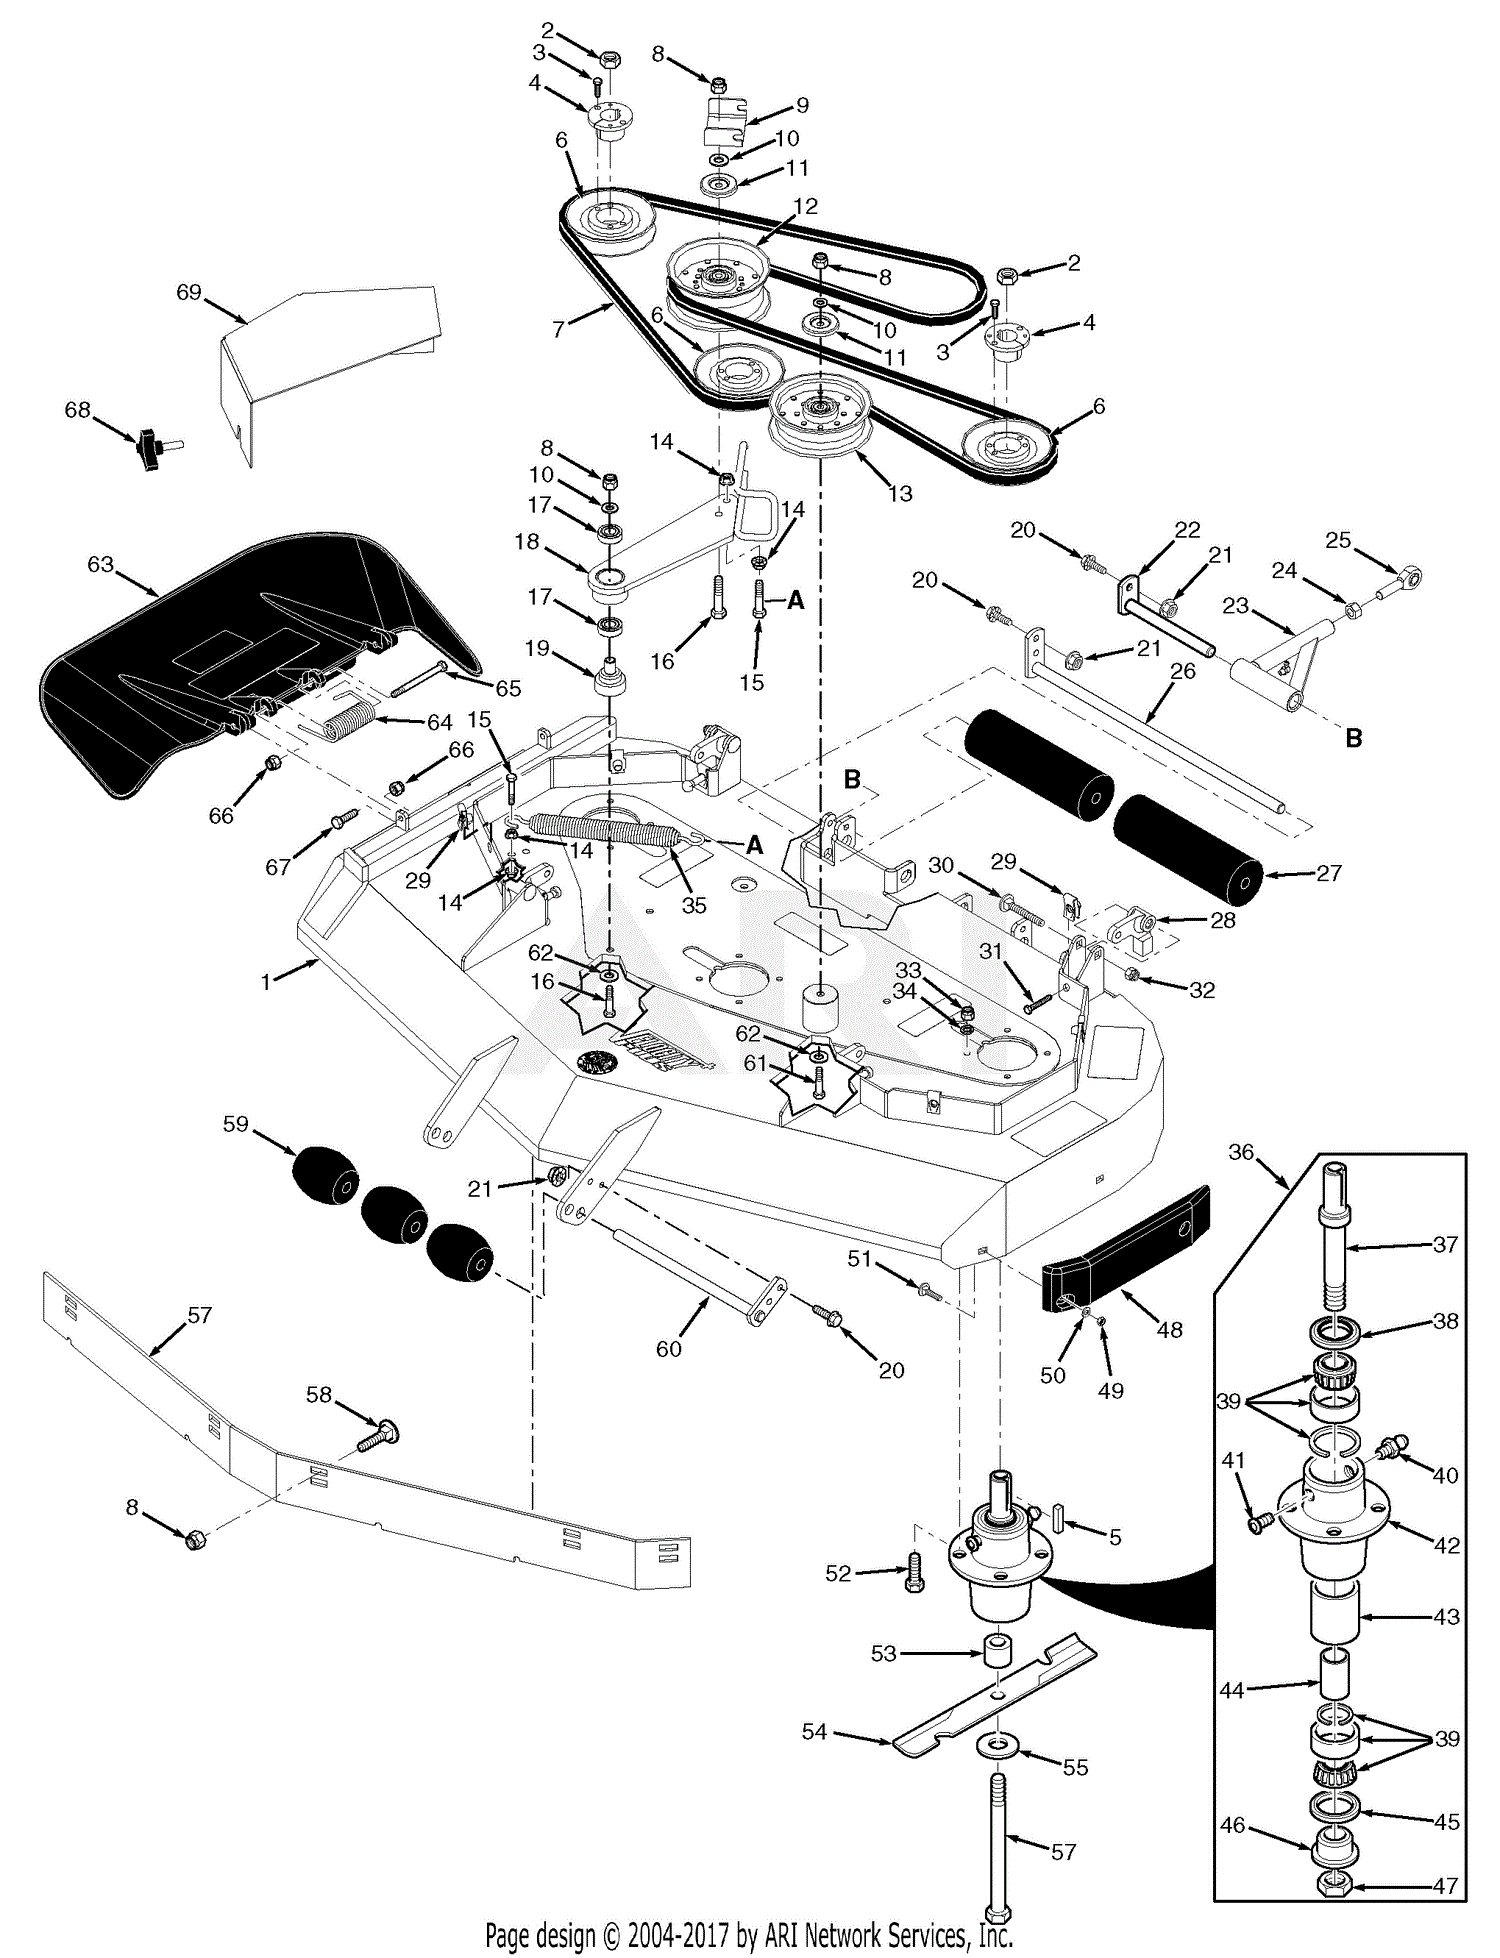 scag svr 52 wiring diagram